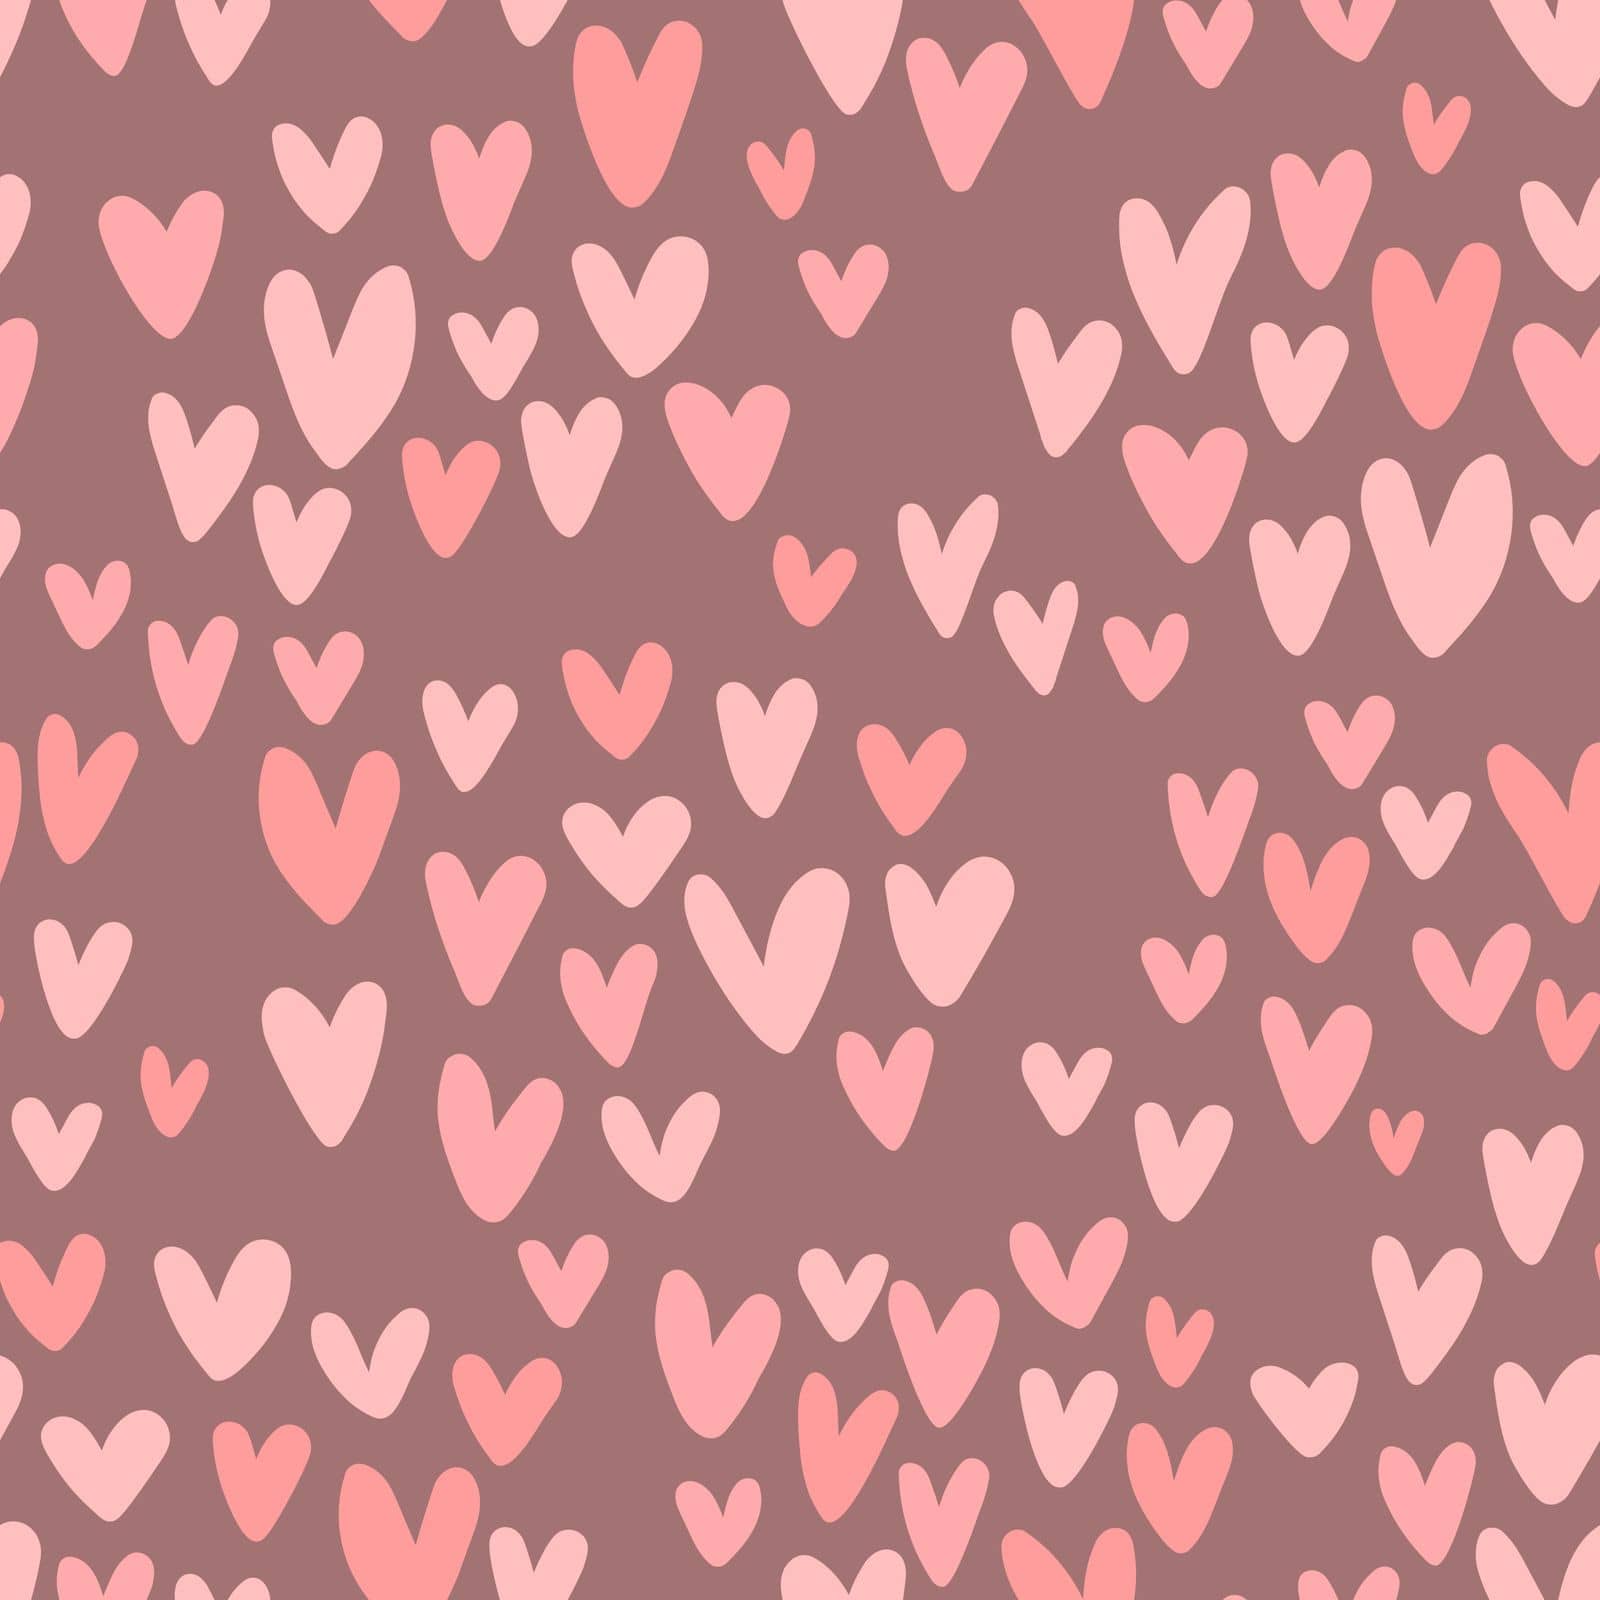 Heart marker drawn seamless vector pattern. Valentine's day handwritten background. Endless romantic print. by kizuneko